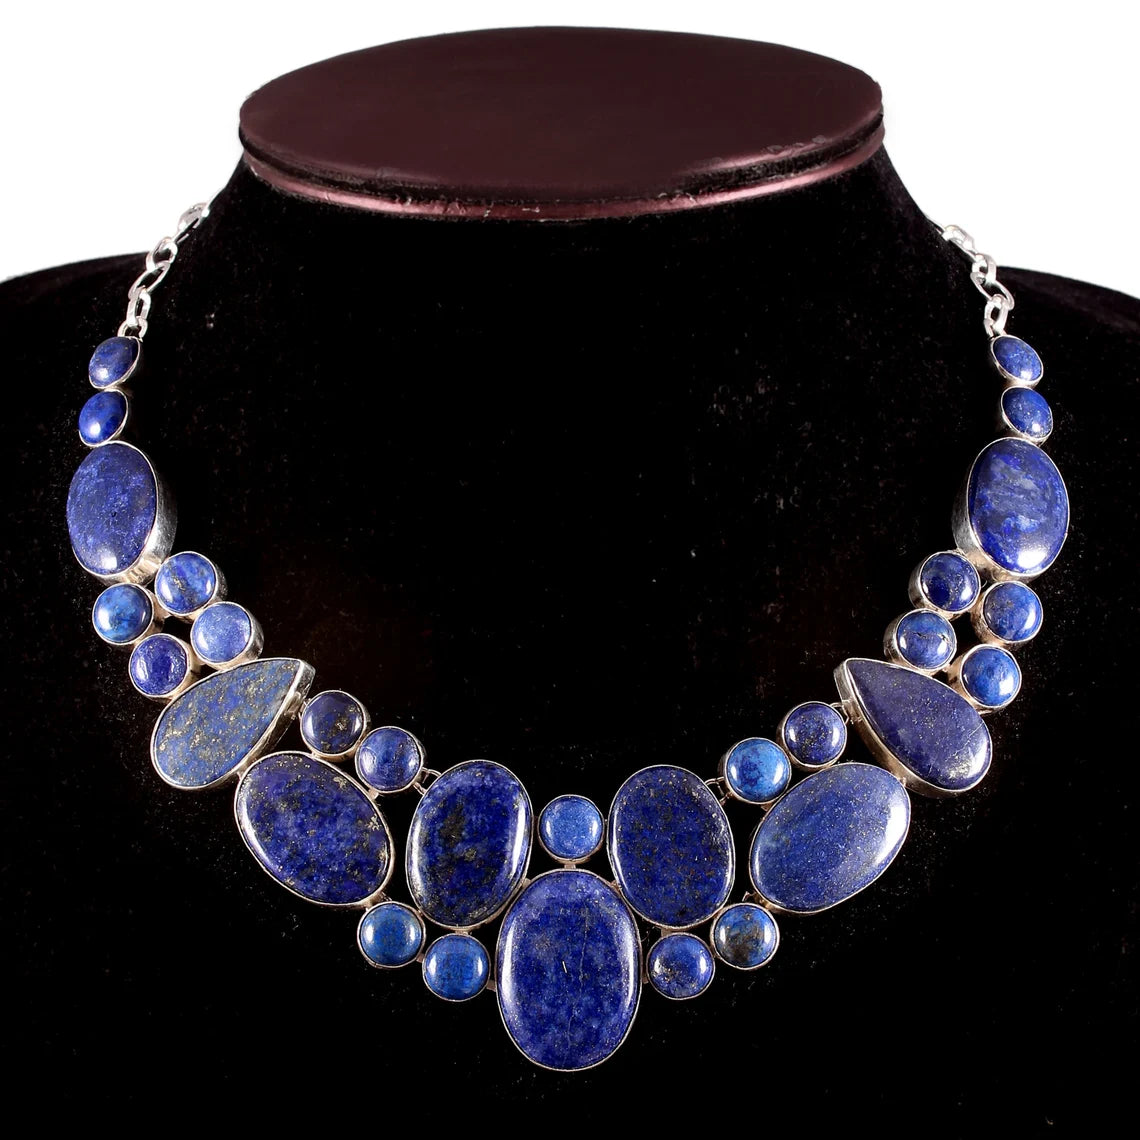 Lapis Lazuli Vintage Bib Necklace For Women - 925 Solid Sterling Silver Wedding Necklace